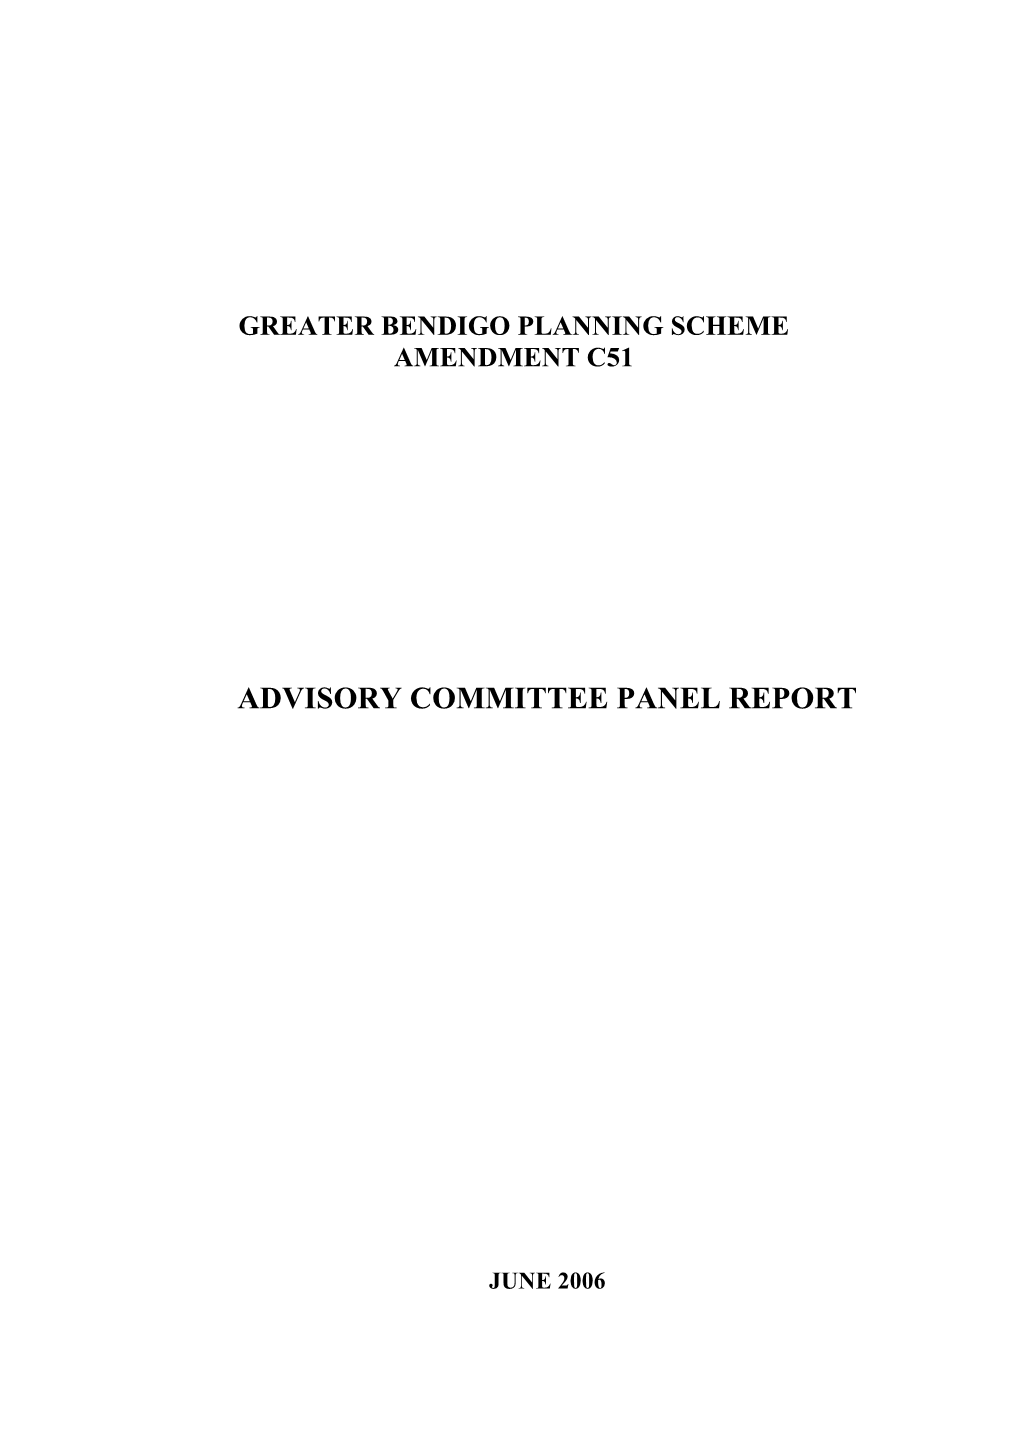 Advisory Committee Panel Report